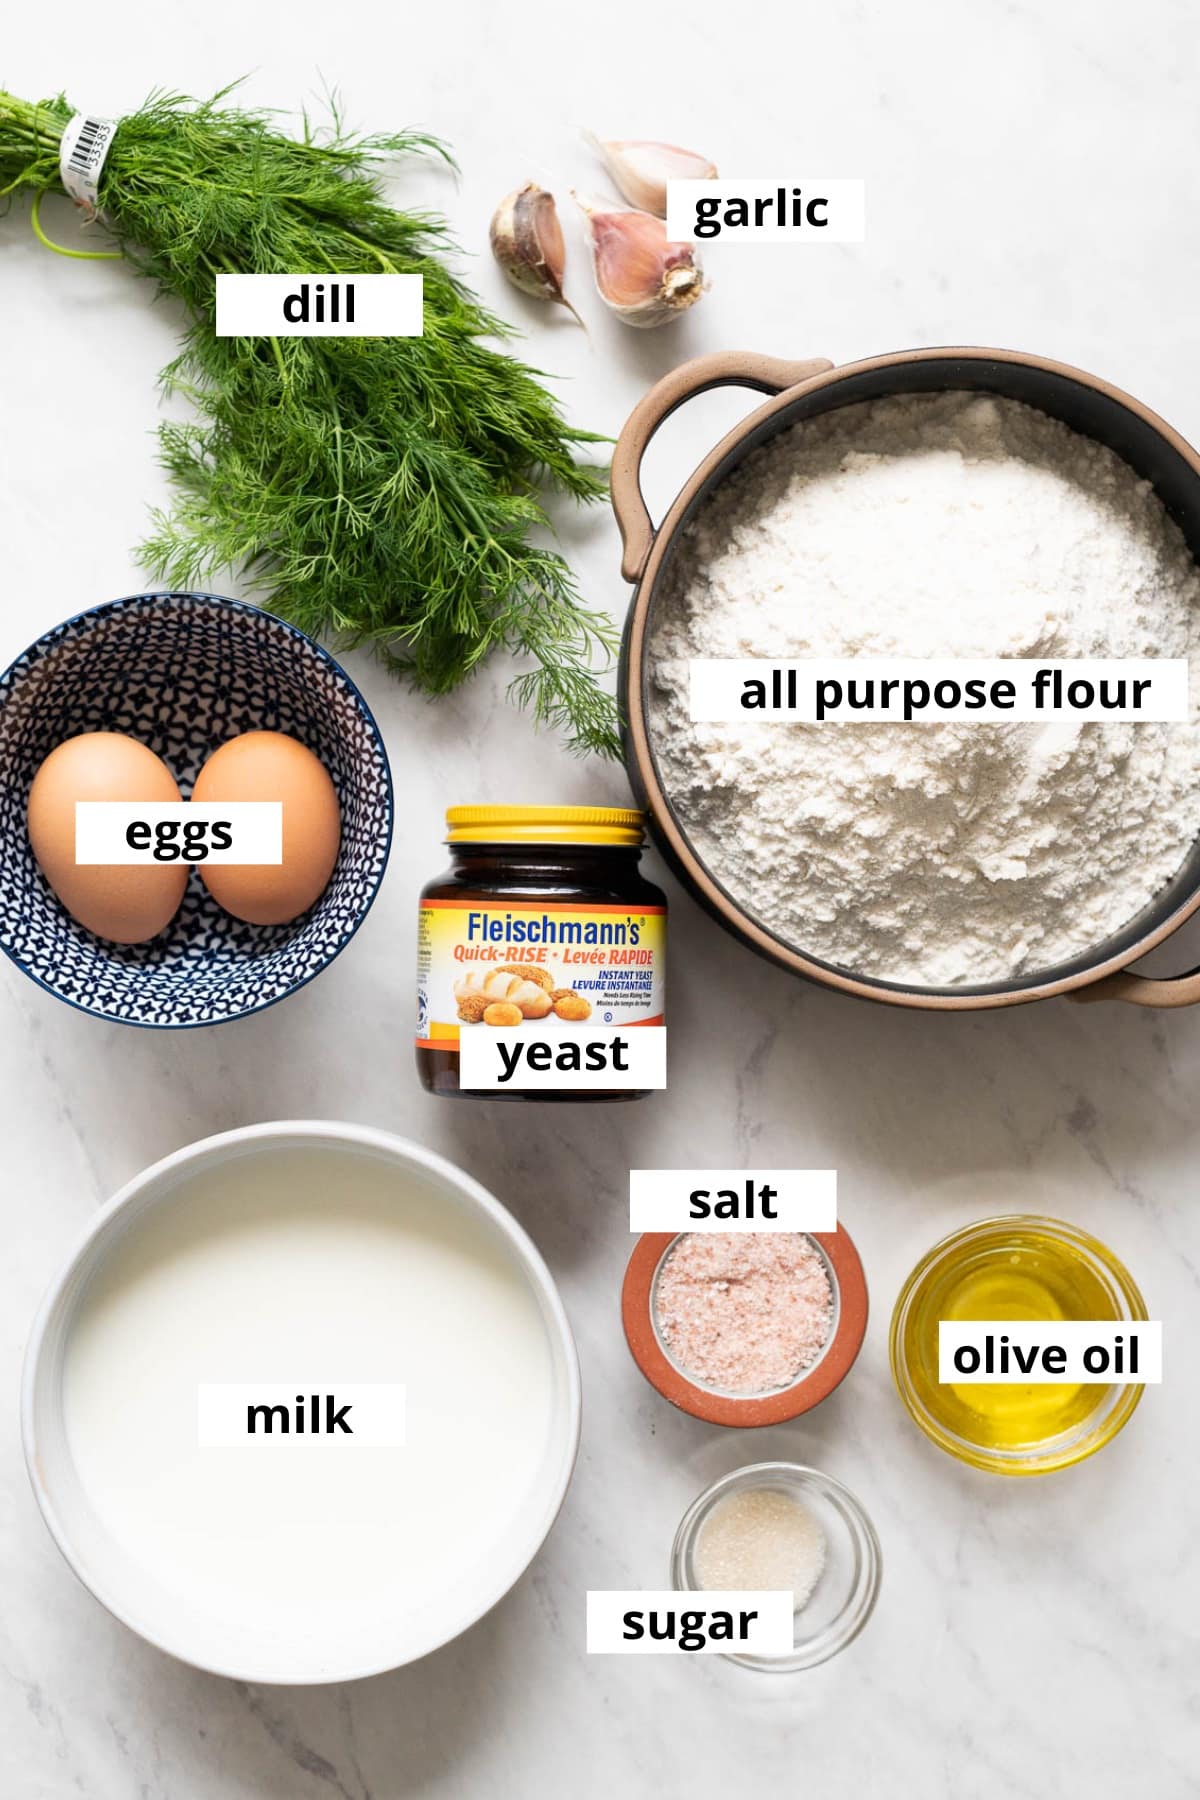 All-purpose flour, garlic, dill, eggs, yeast, salt, oil, sugar, milk.